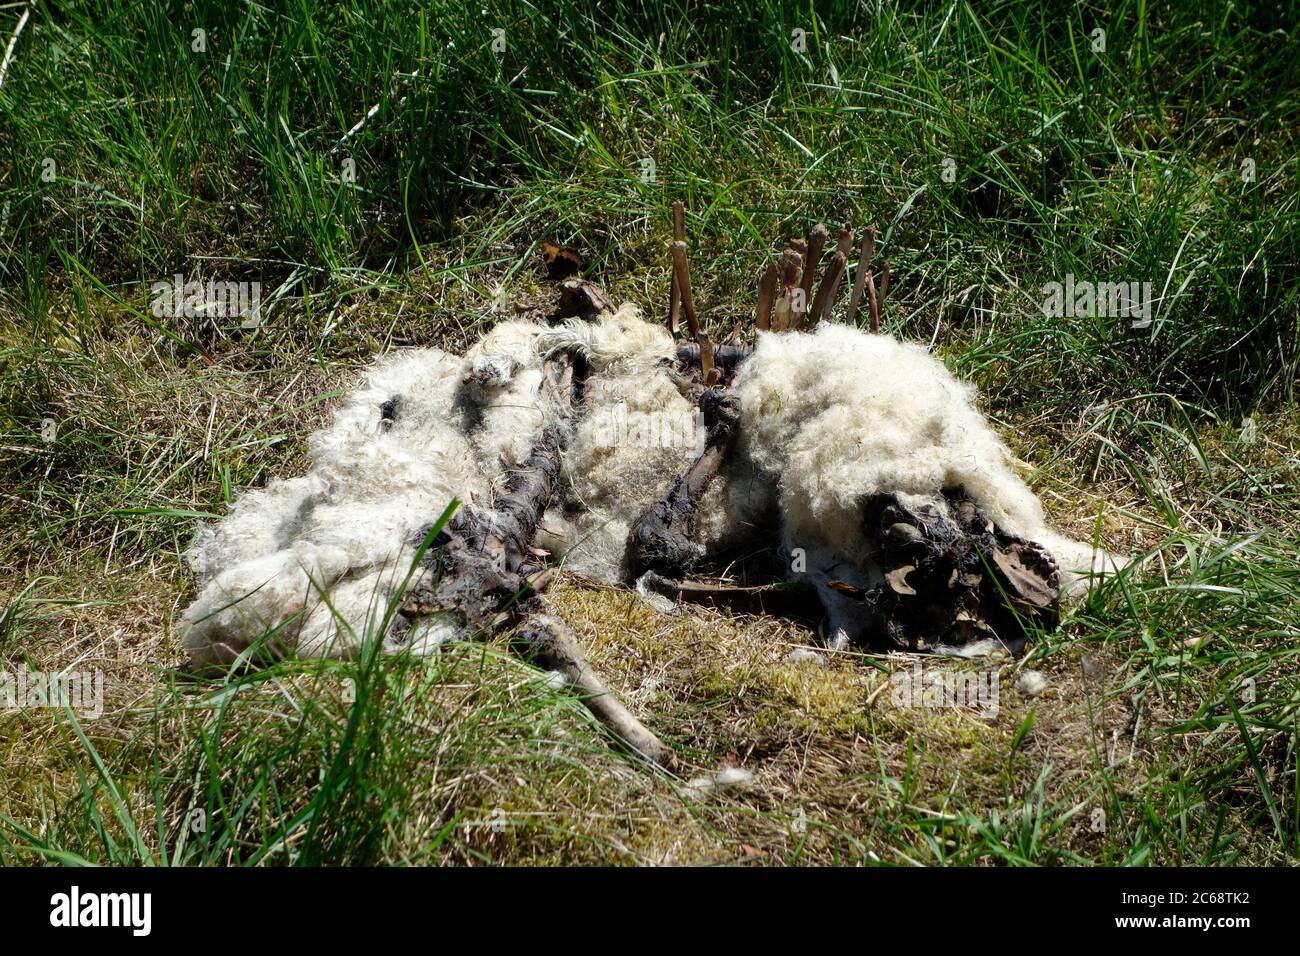 Dead Lamb Decomposing in a Field, UK Stock Photo